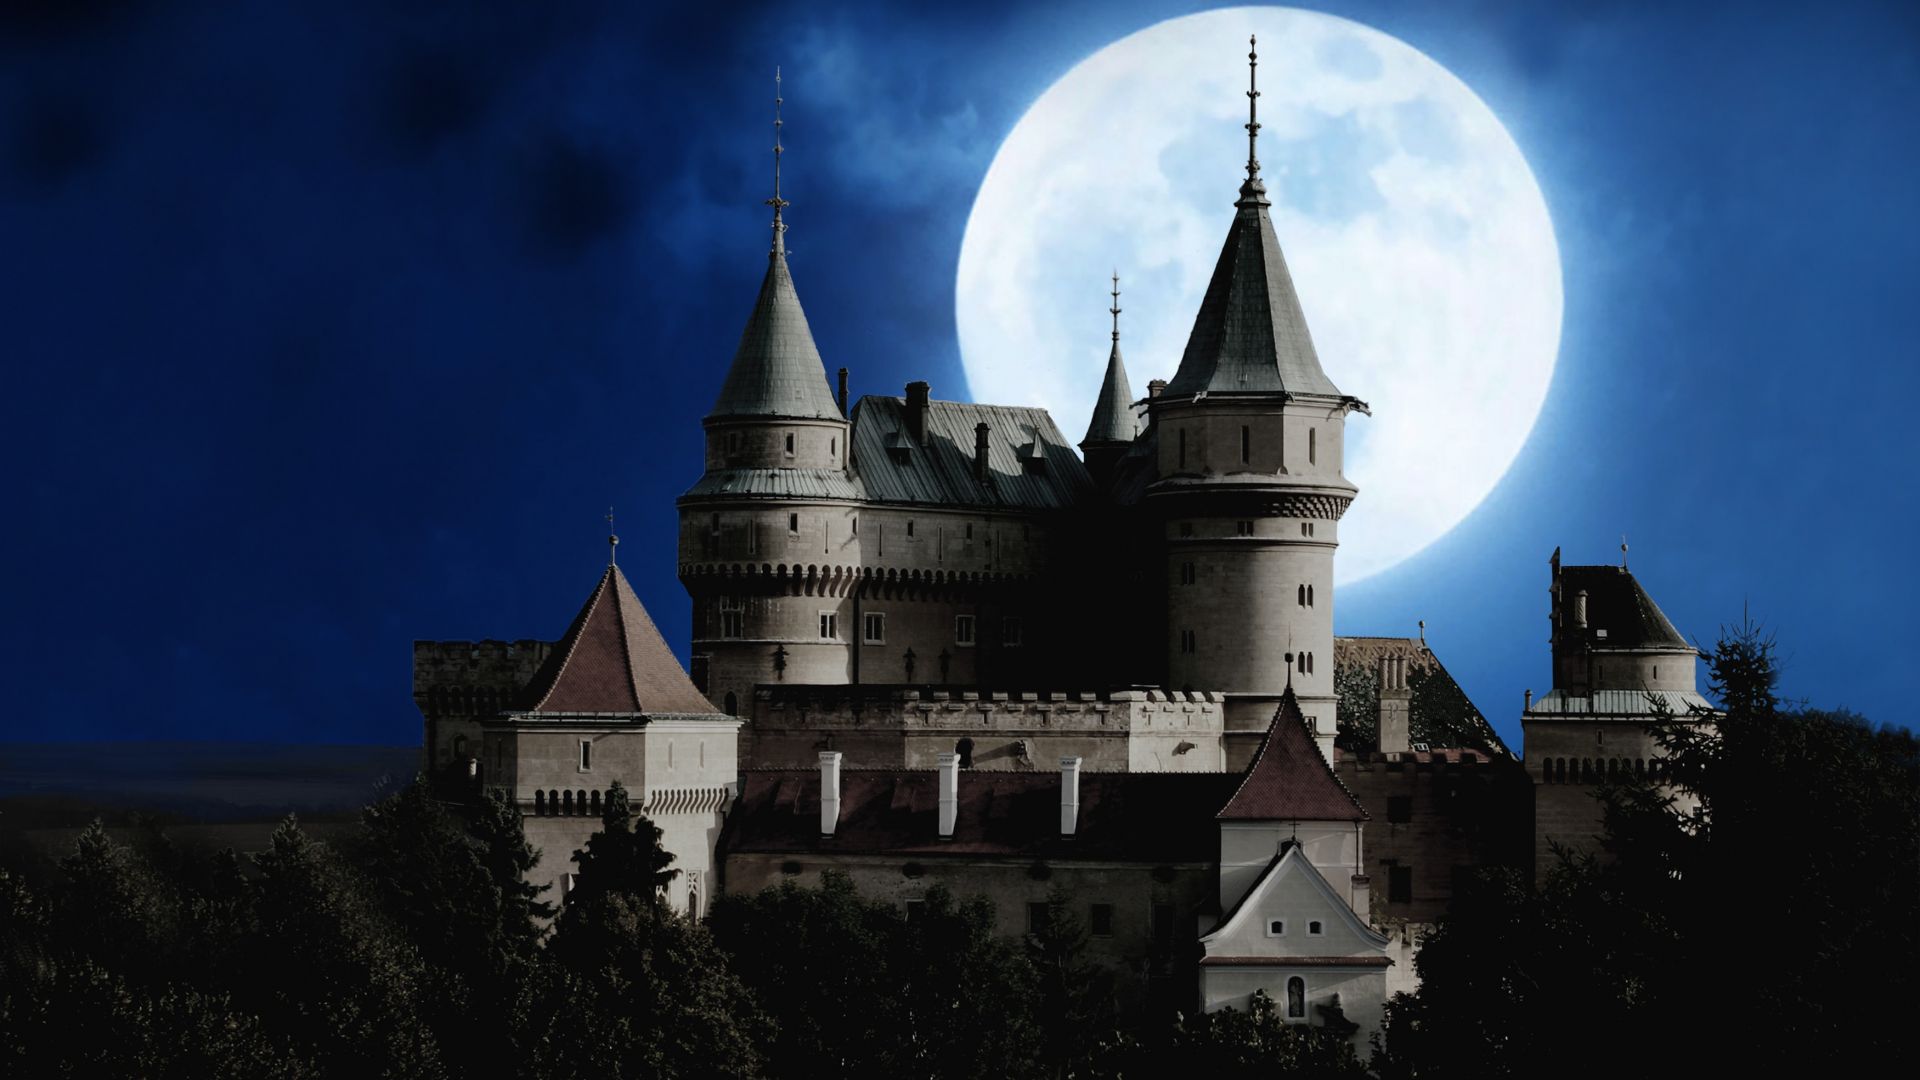 Wallpaper Full Moon, castle, architecture, night